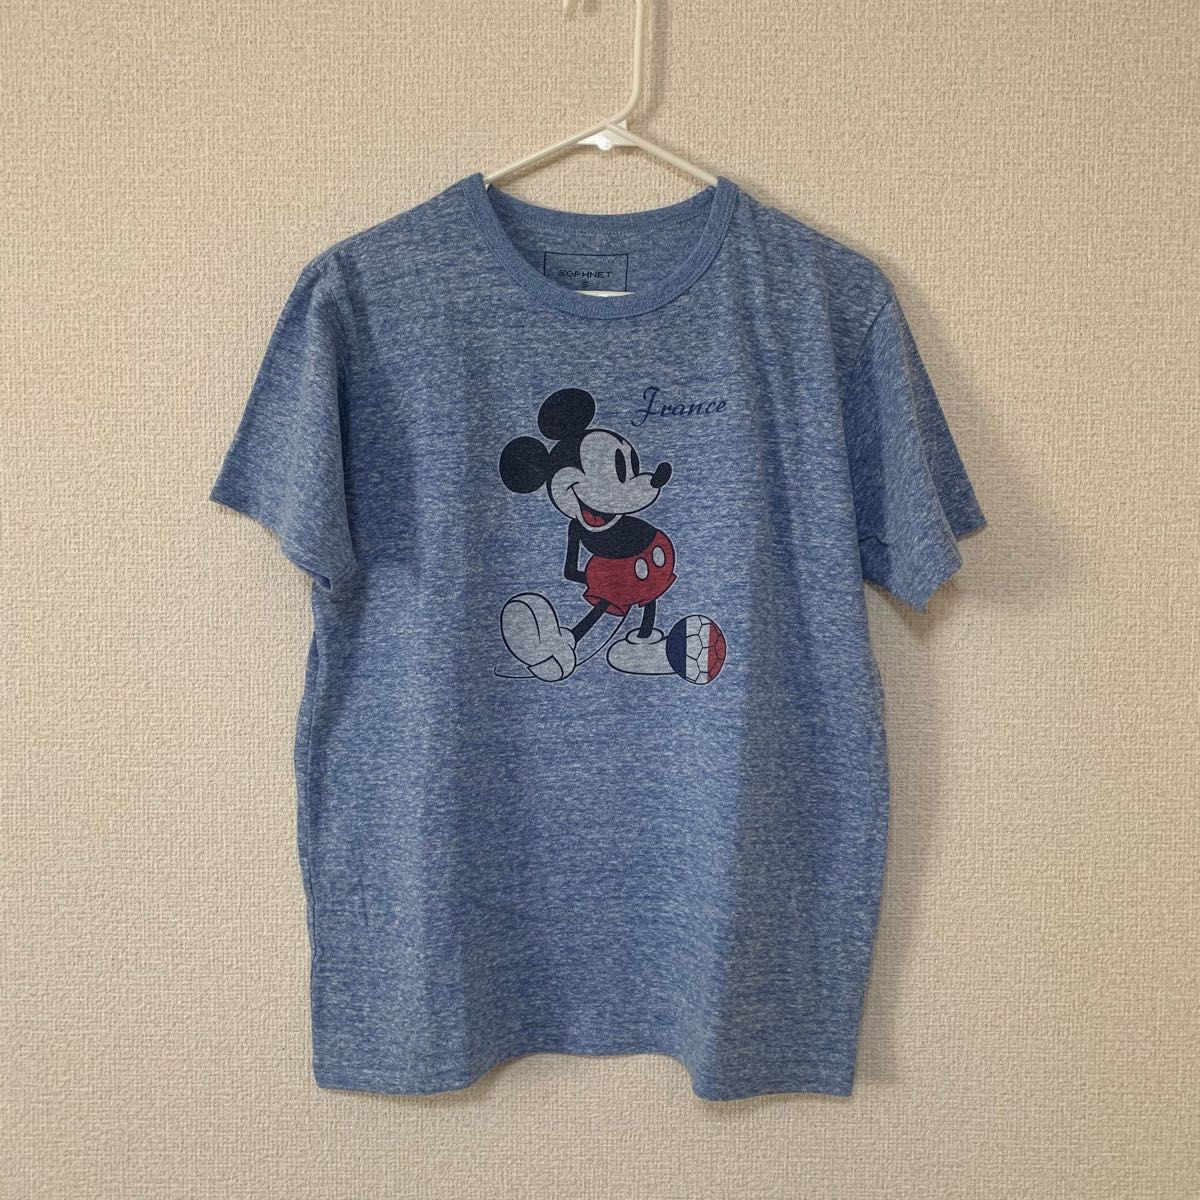 SOPH.ソフ ミッキー フランス ディズニー Tシャツ Sサイズ ブルー 半袖Tシャツ Disney